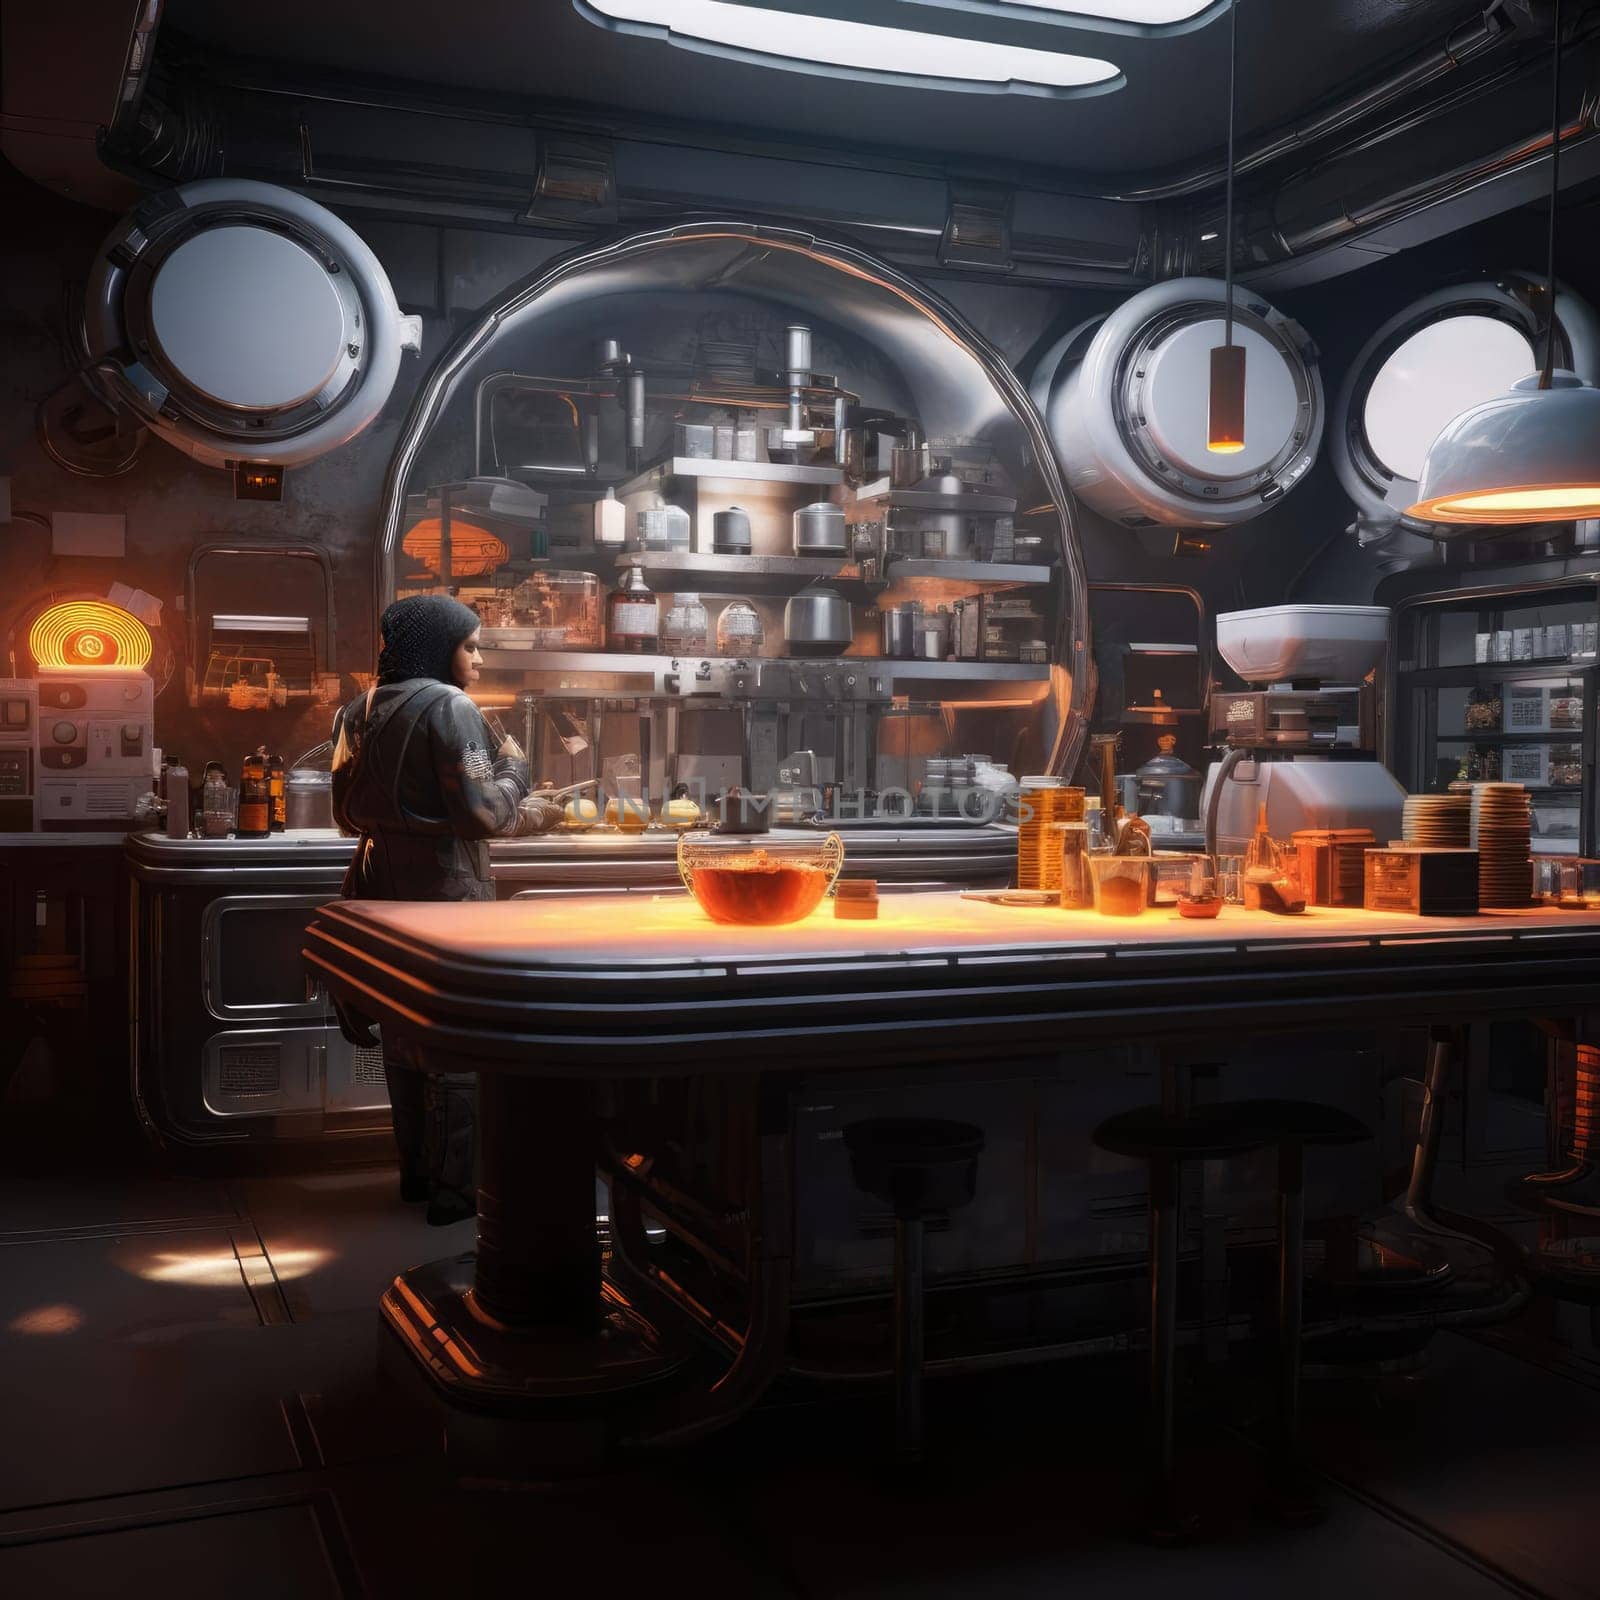 Sci-fi is the kitchen of the future. Interior